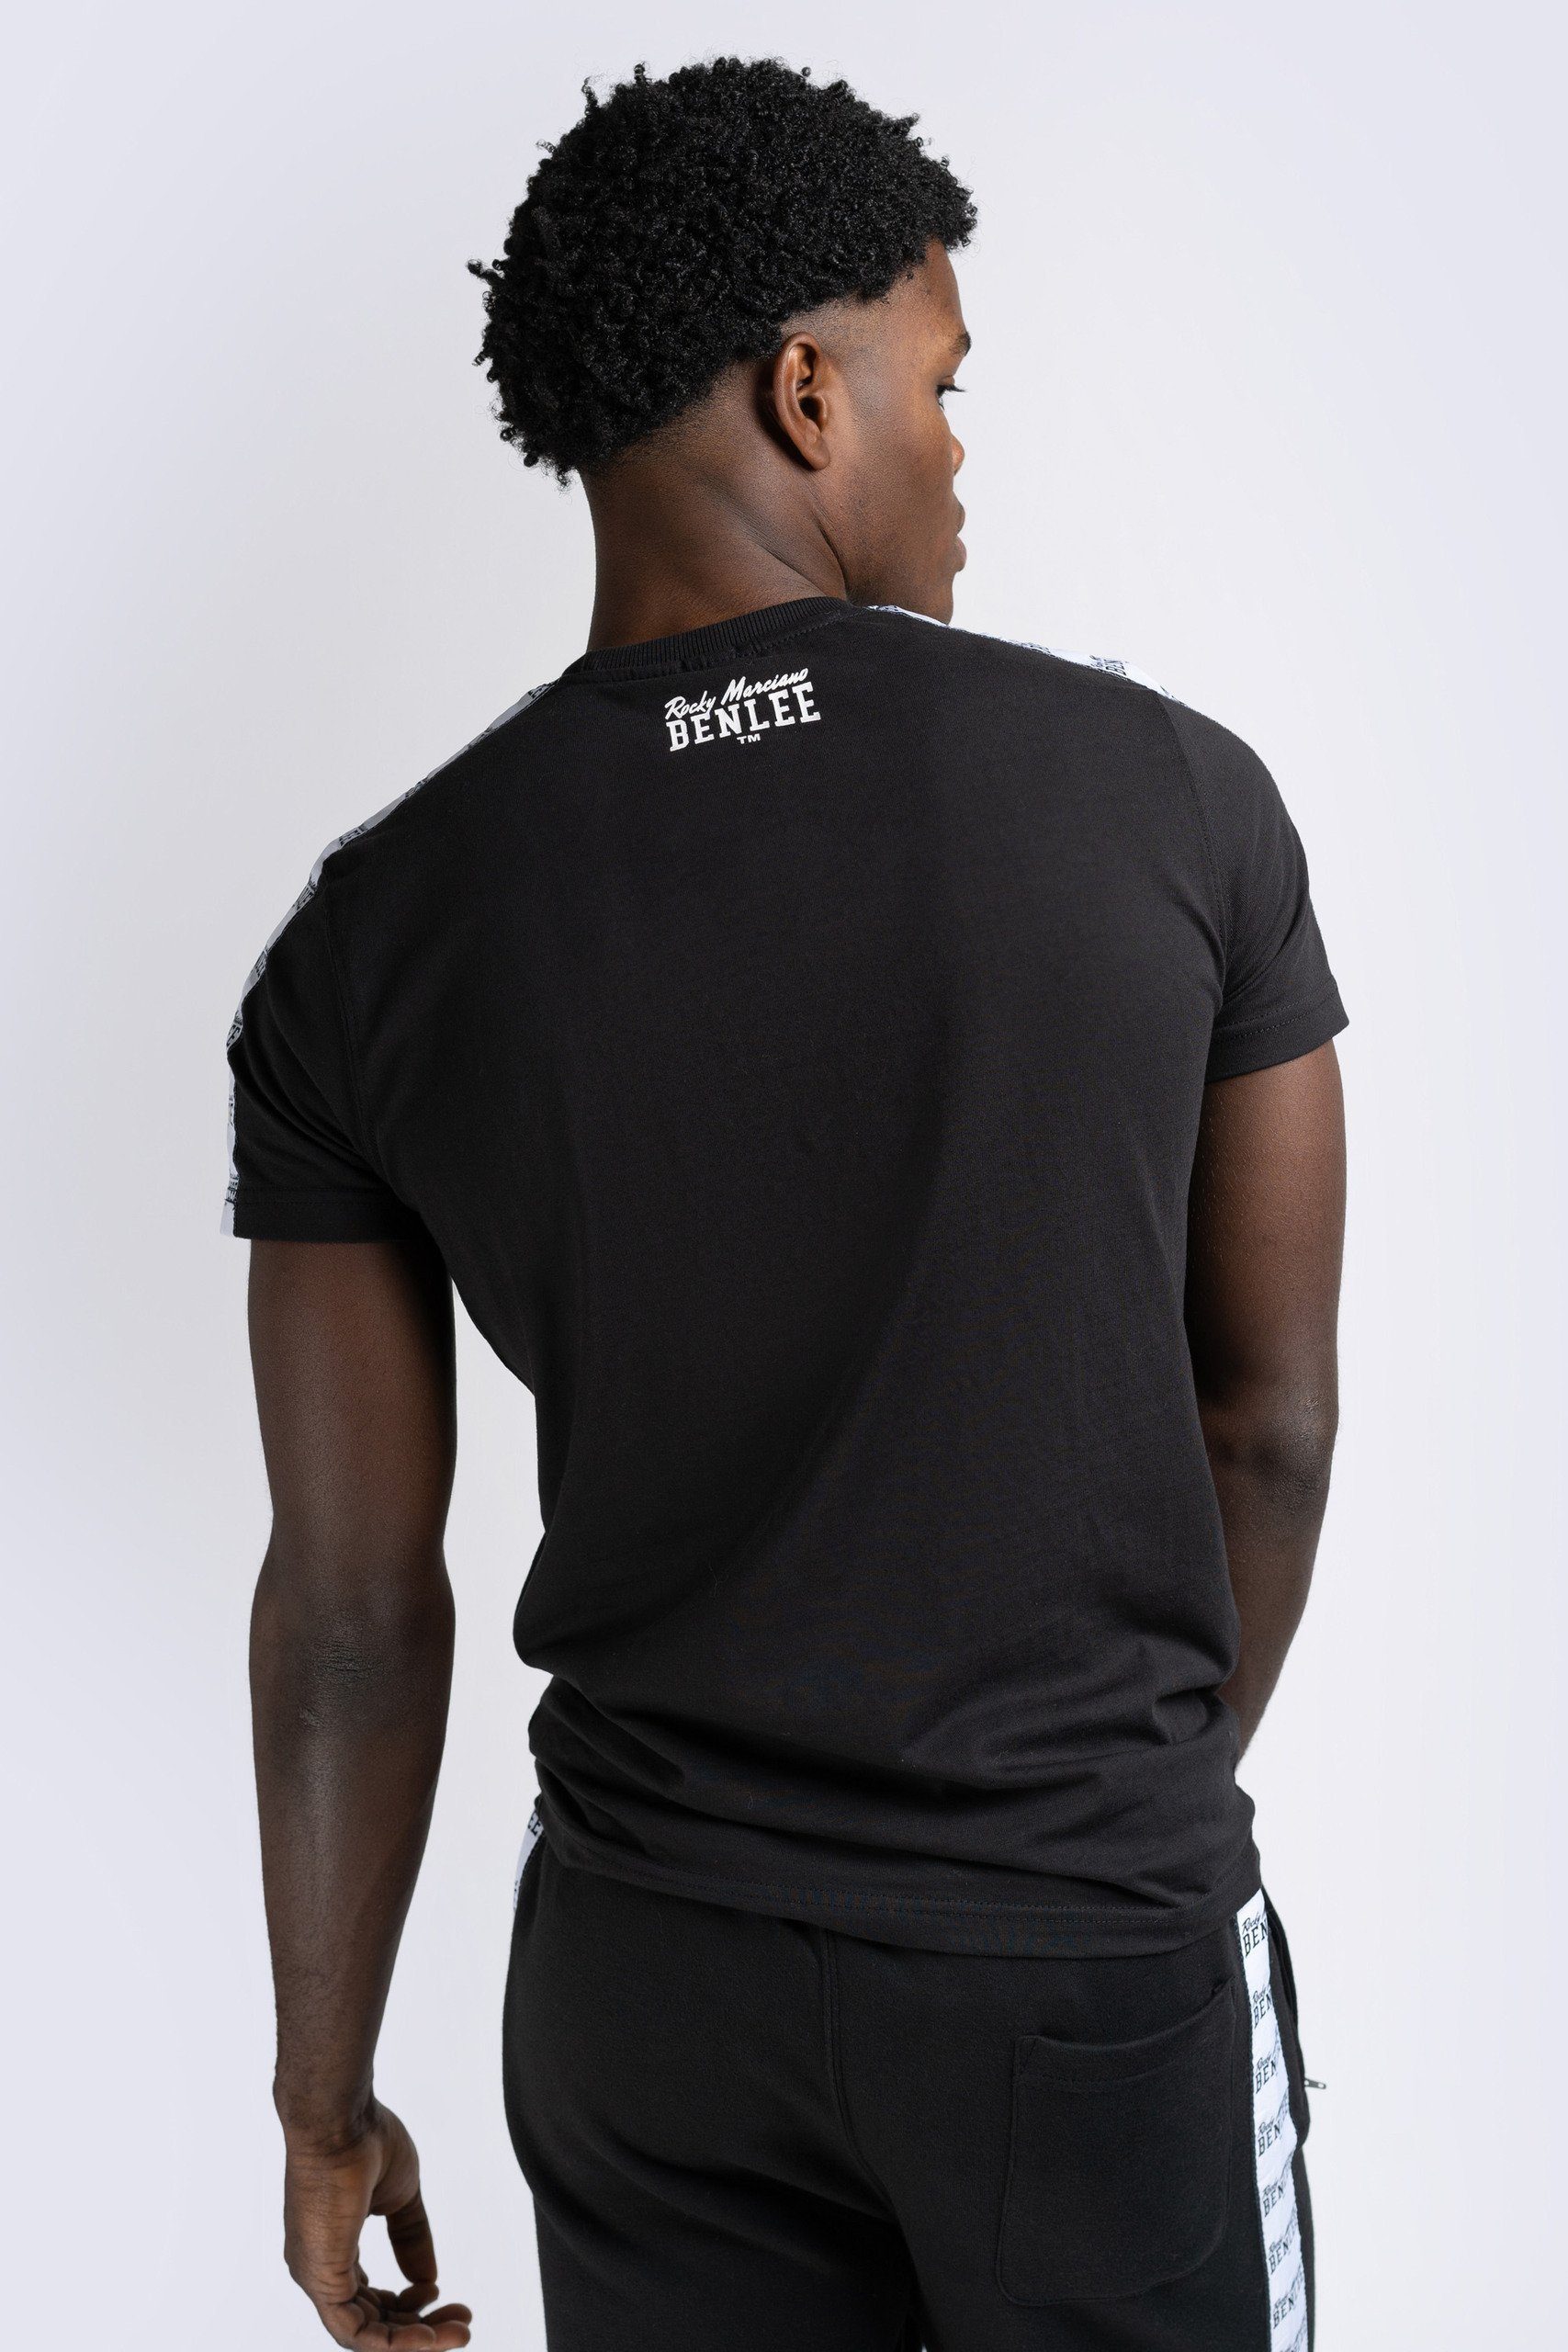 Rocky Marciano Benlee T-Shirt KINGSPORT Black